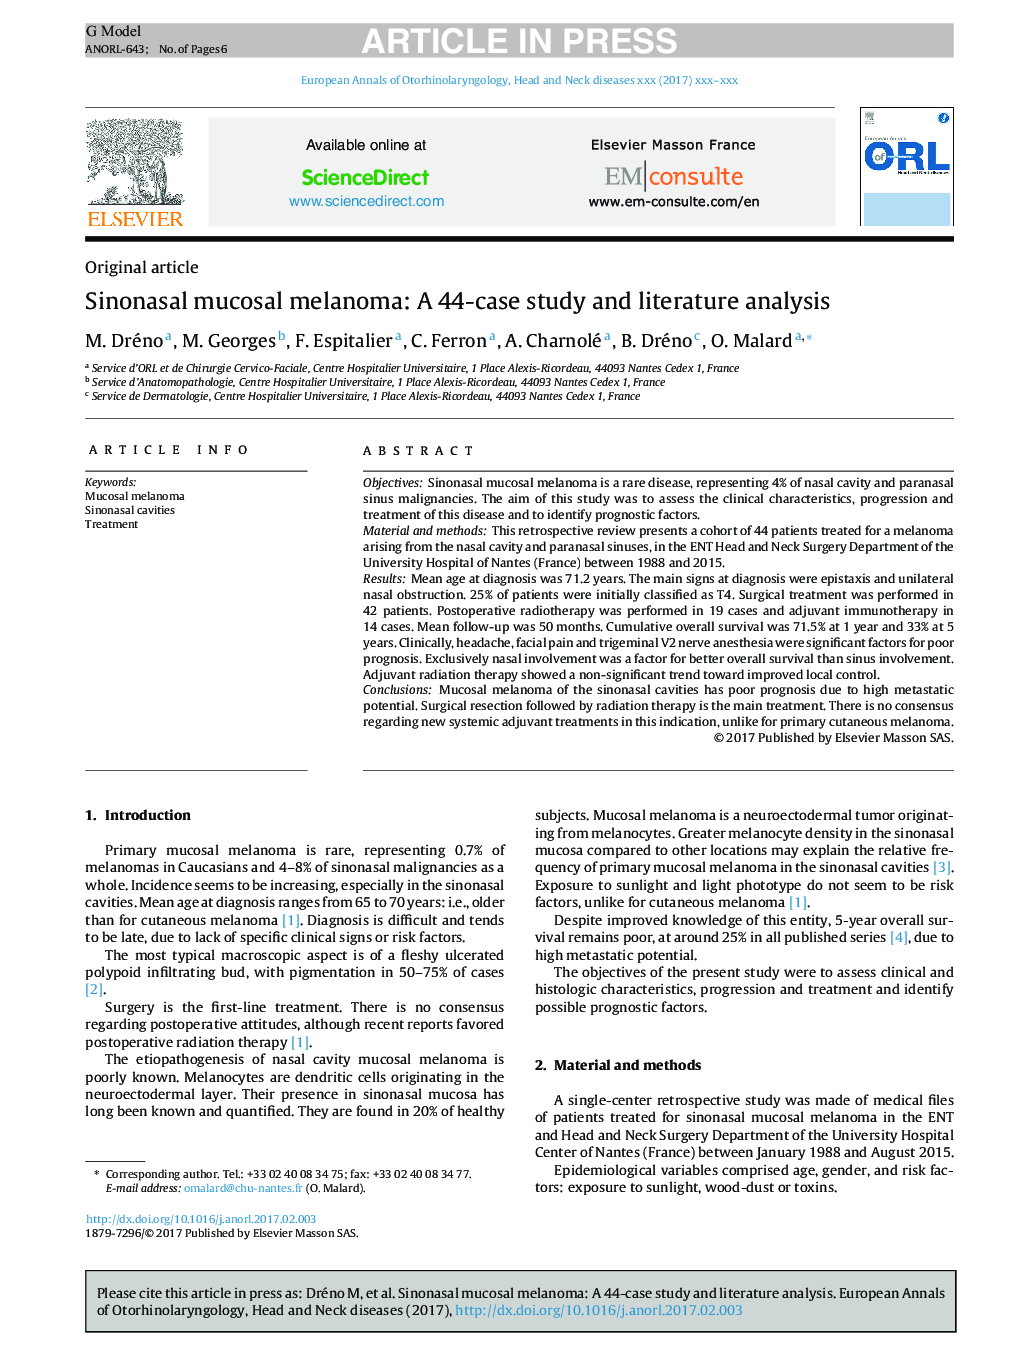 Sinonasal mucosal melanoma: A 44-case study and literature analysis